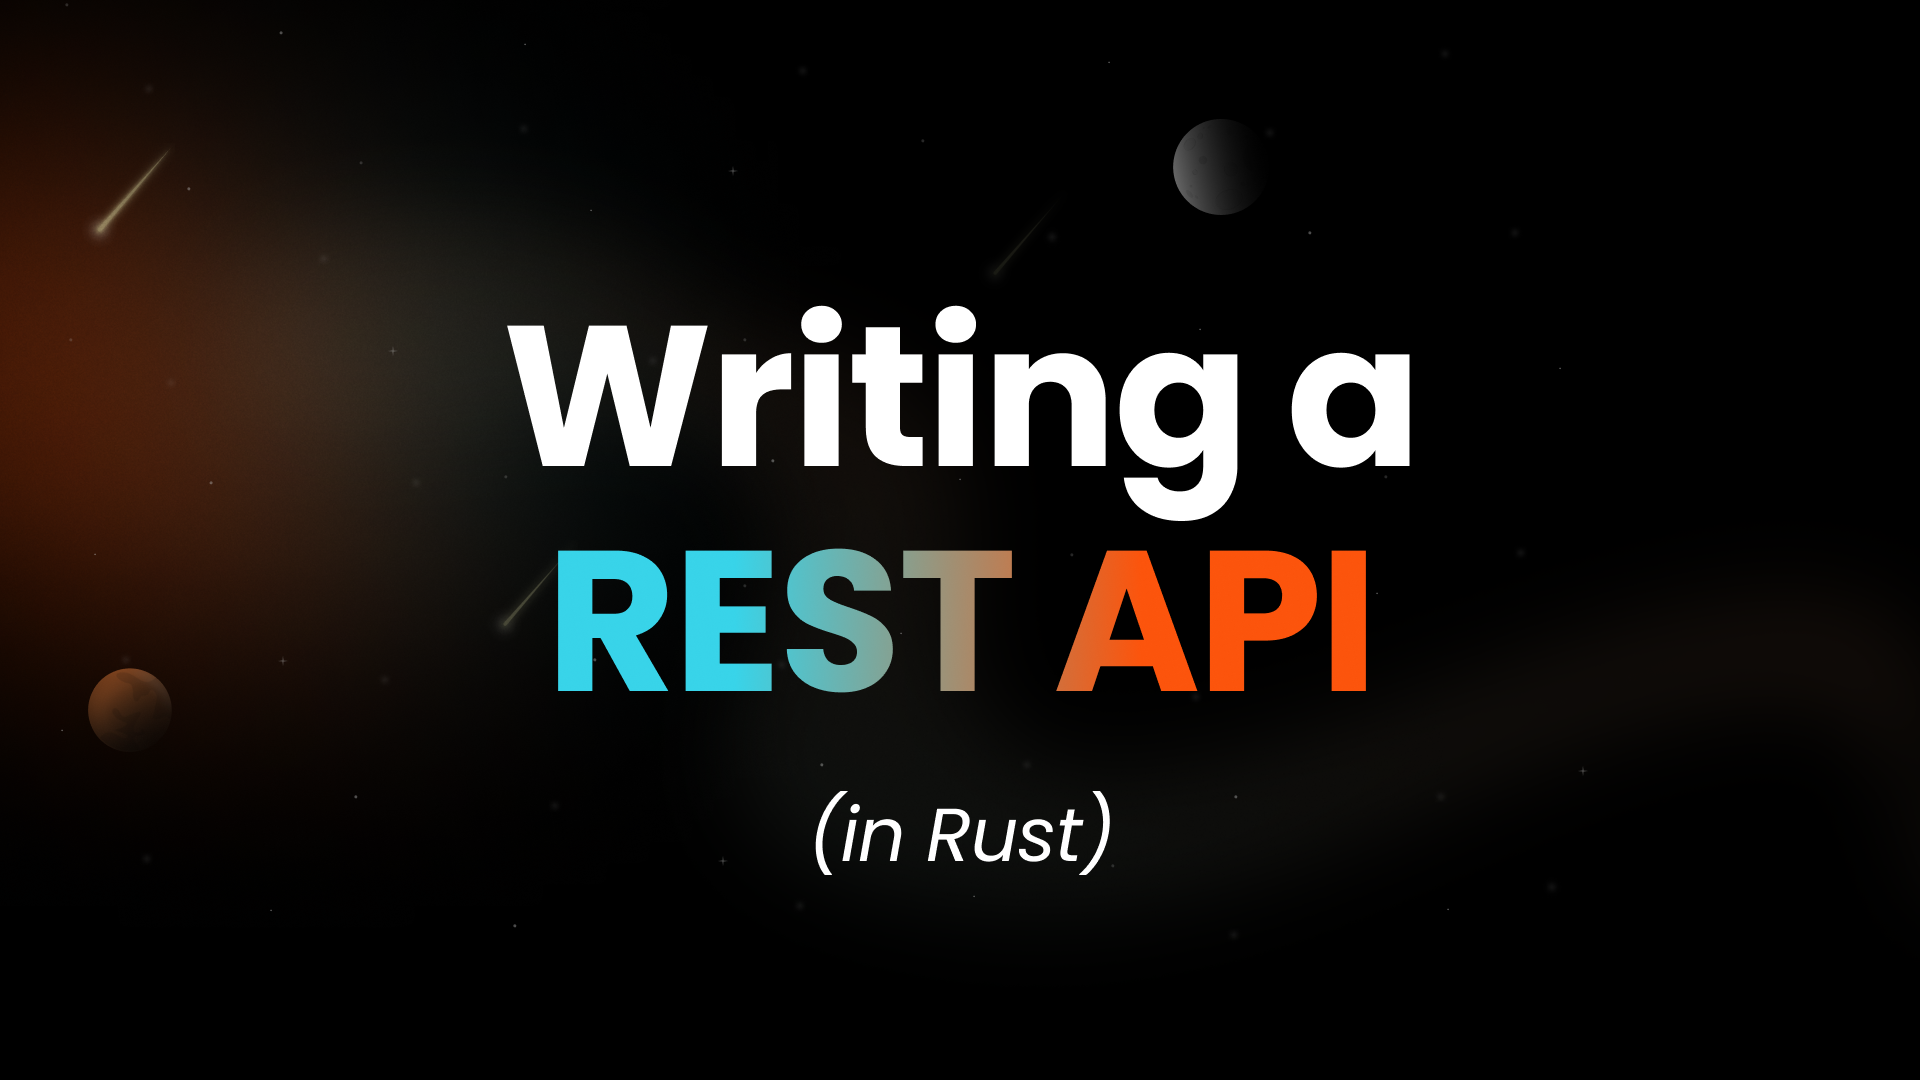 Writing a REST API in Rust